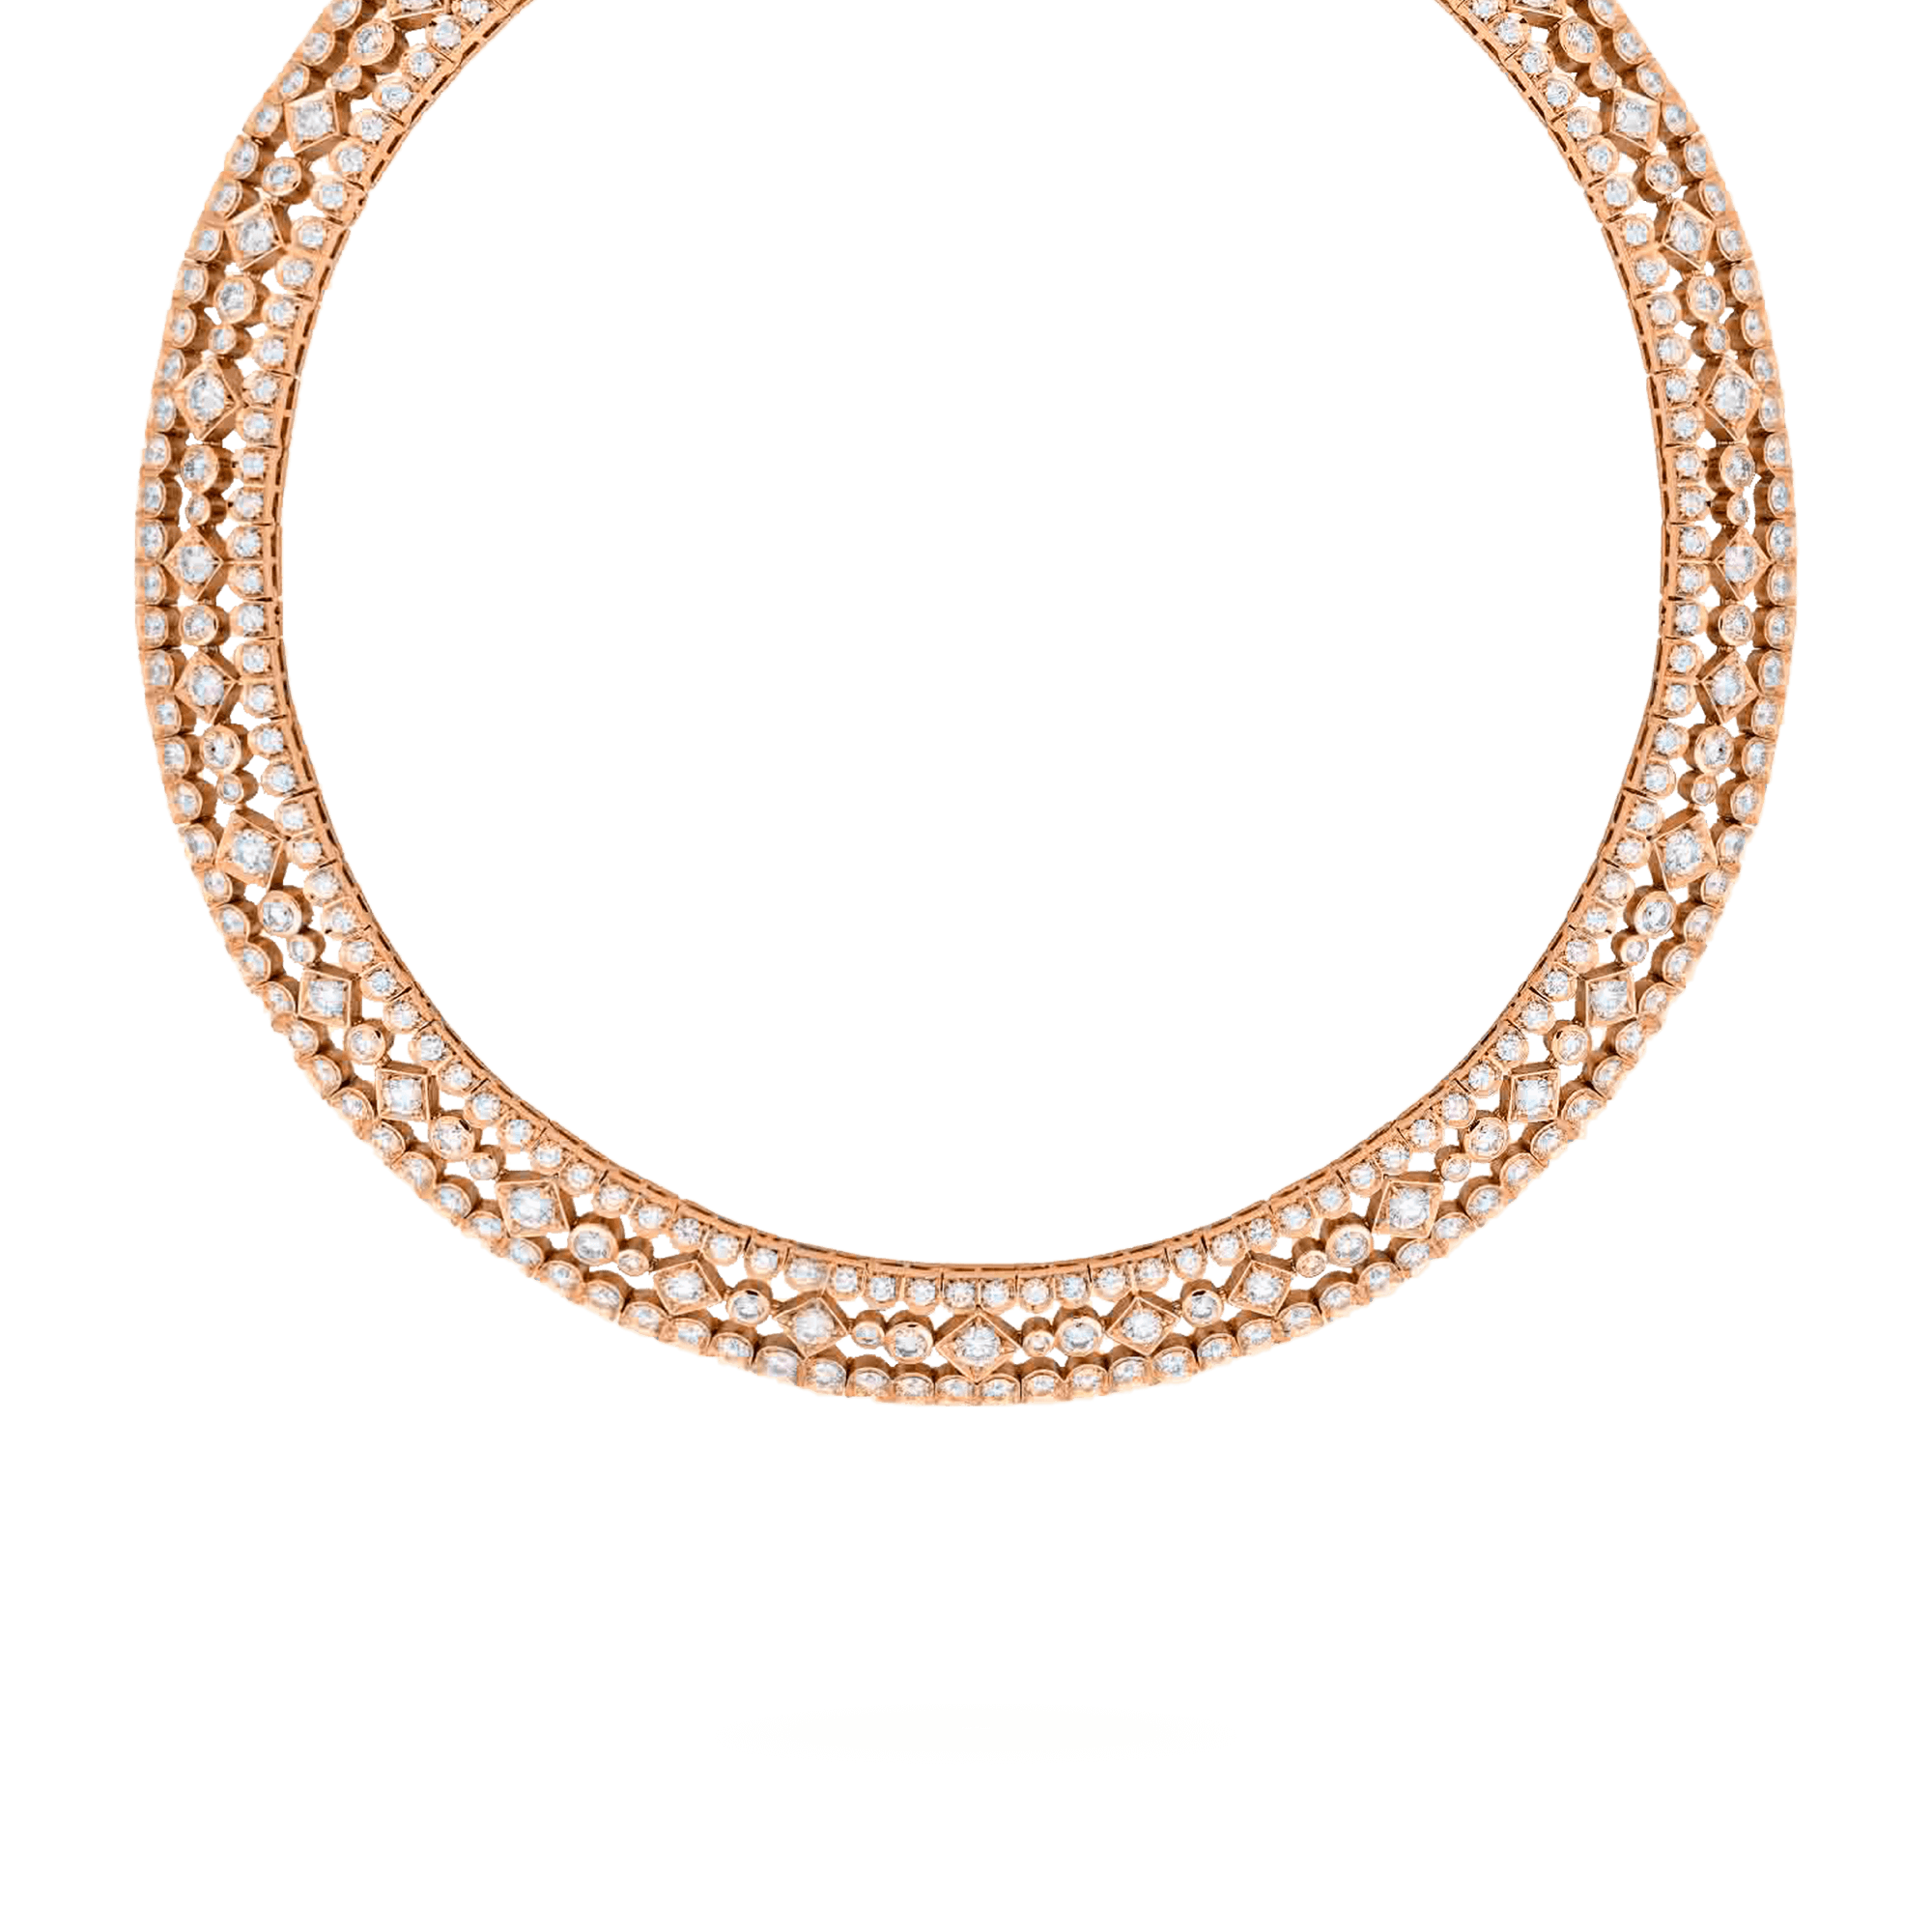 Garrard Albemarle Classic High Jewellery Diamond Collar Necklace In 18ct Rose Gold 2013306